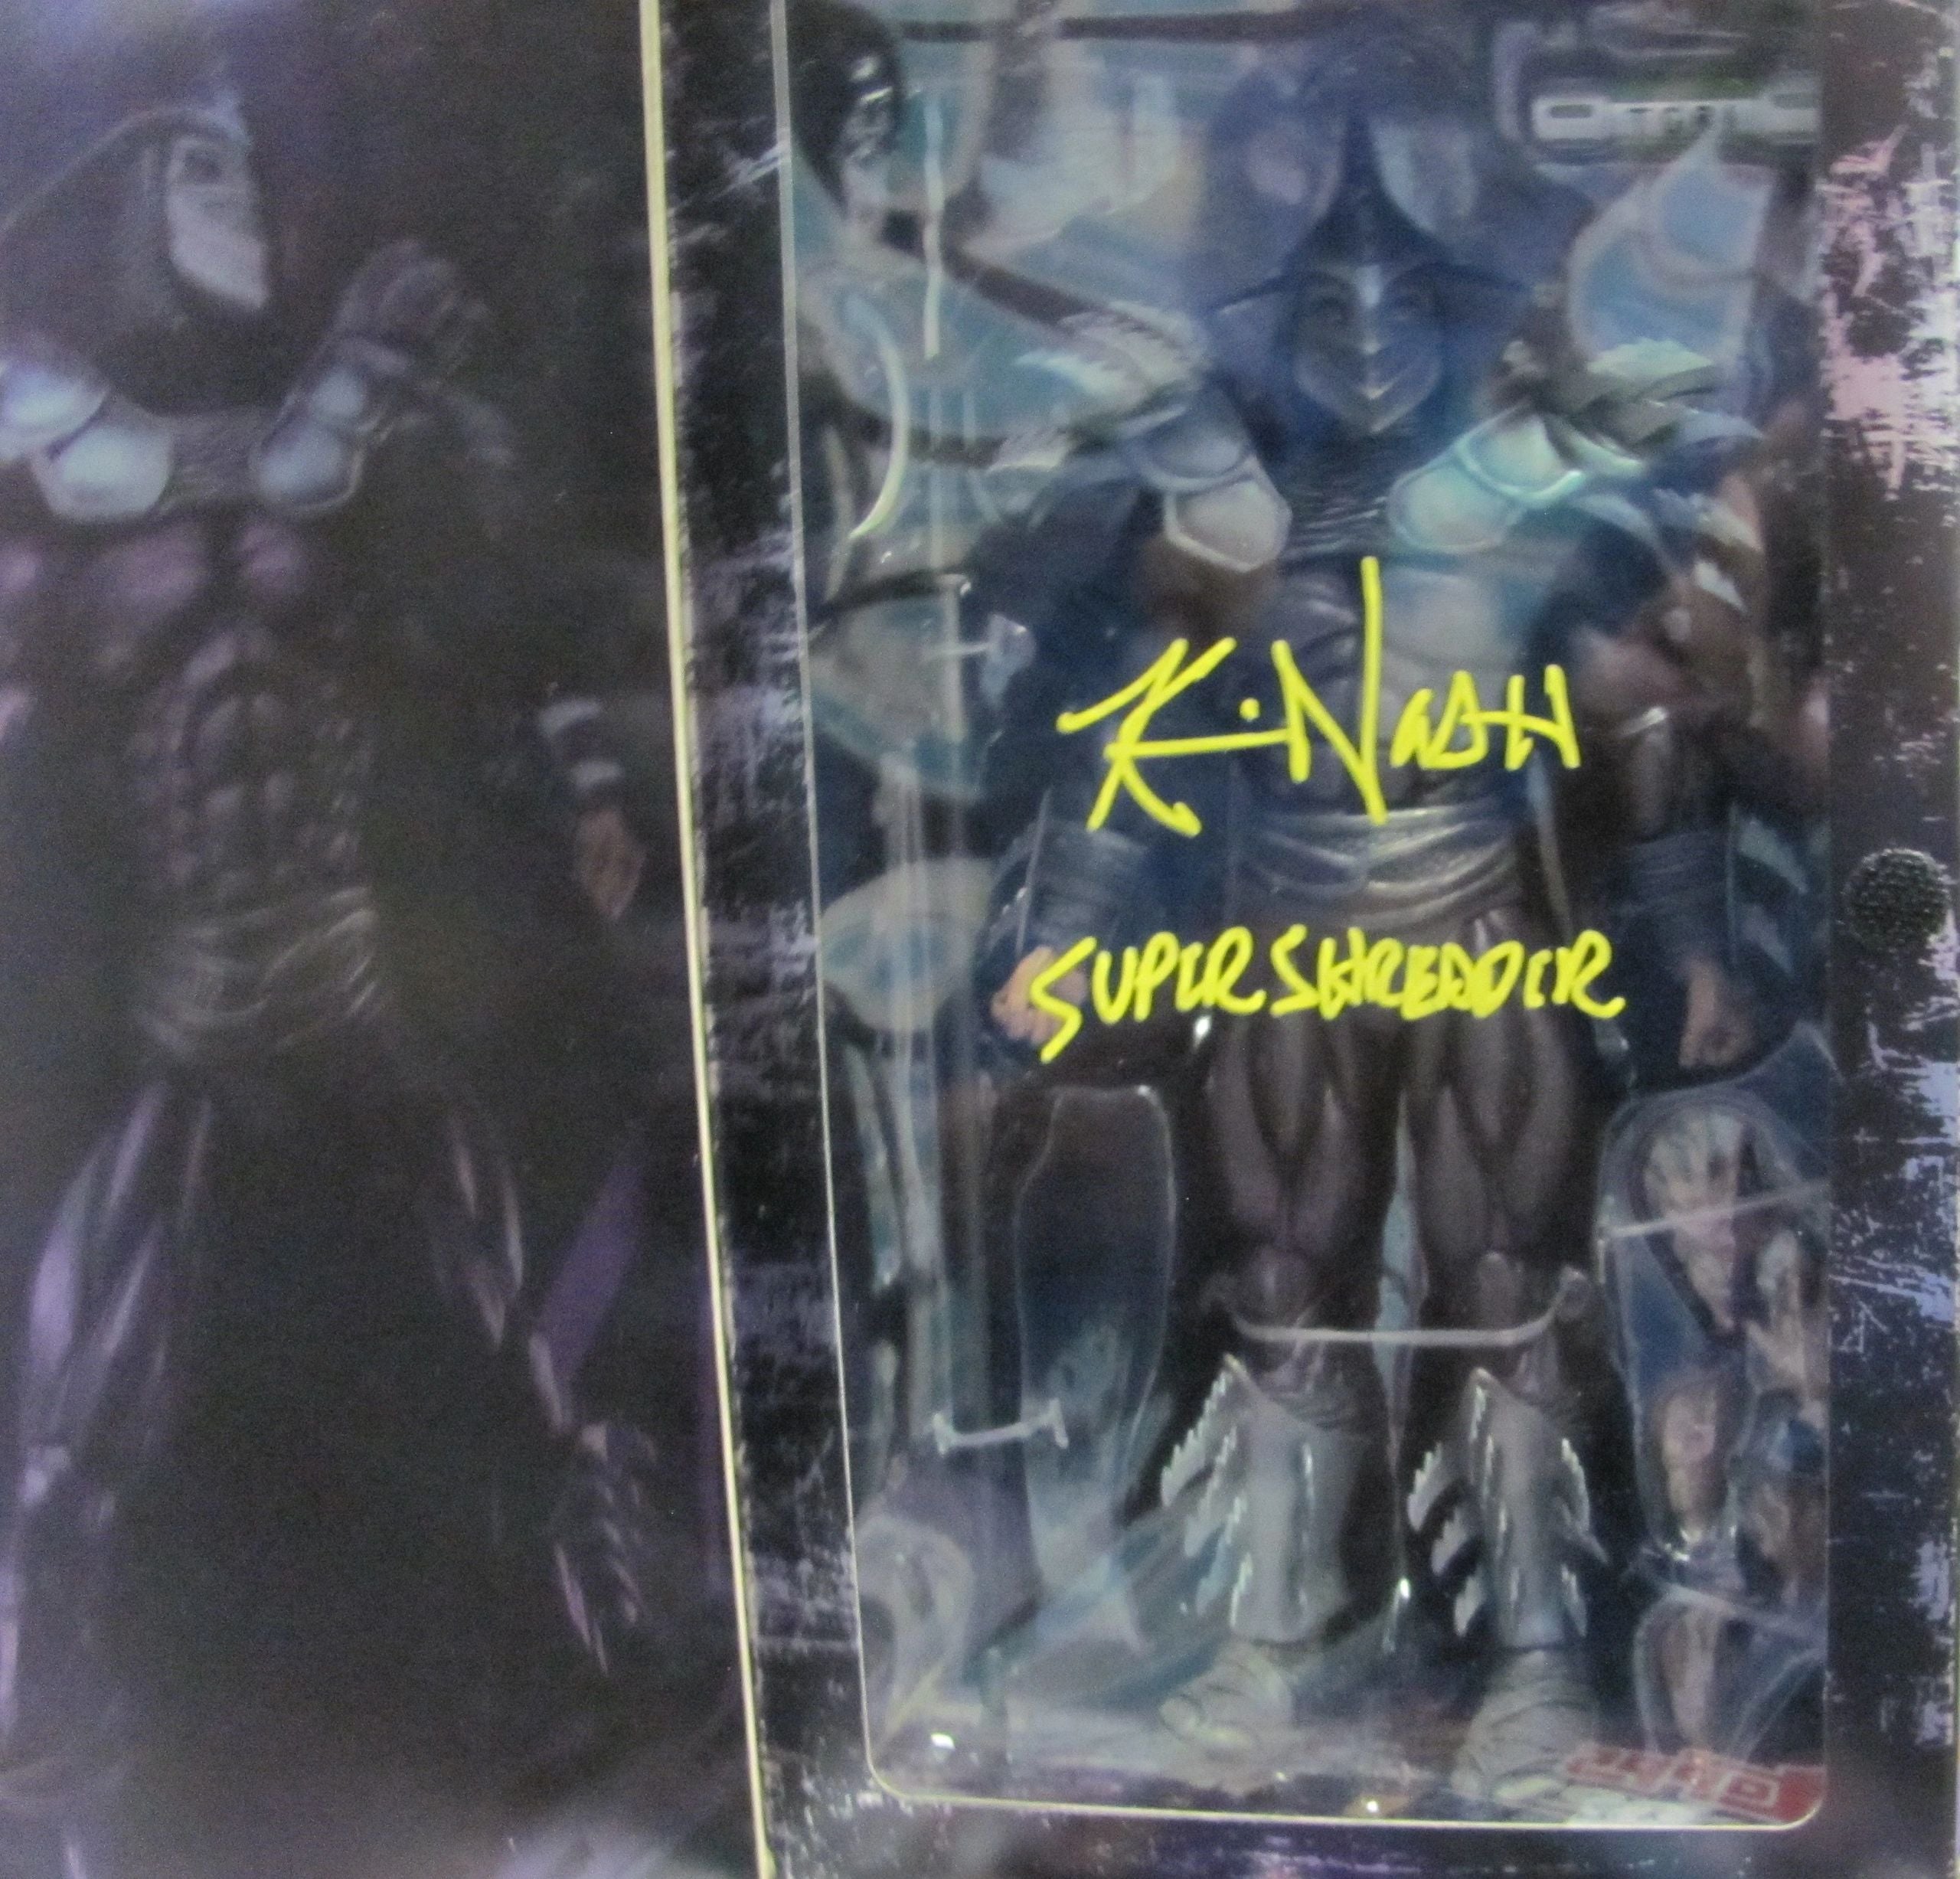 NECA Super Shredder shadow master Ninja Turtles Kevin Nash SIGNED INSCRIBED YELLOW PEN